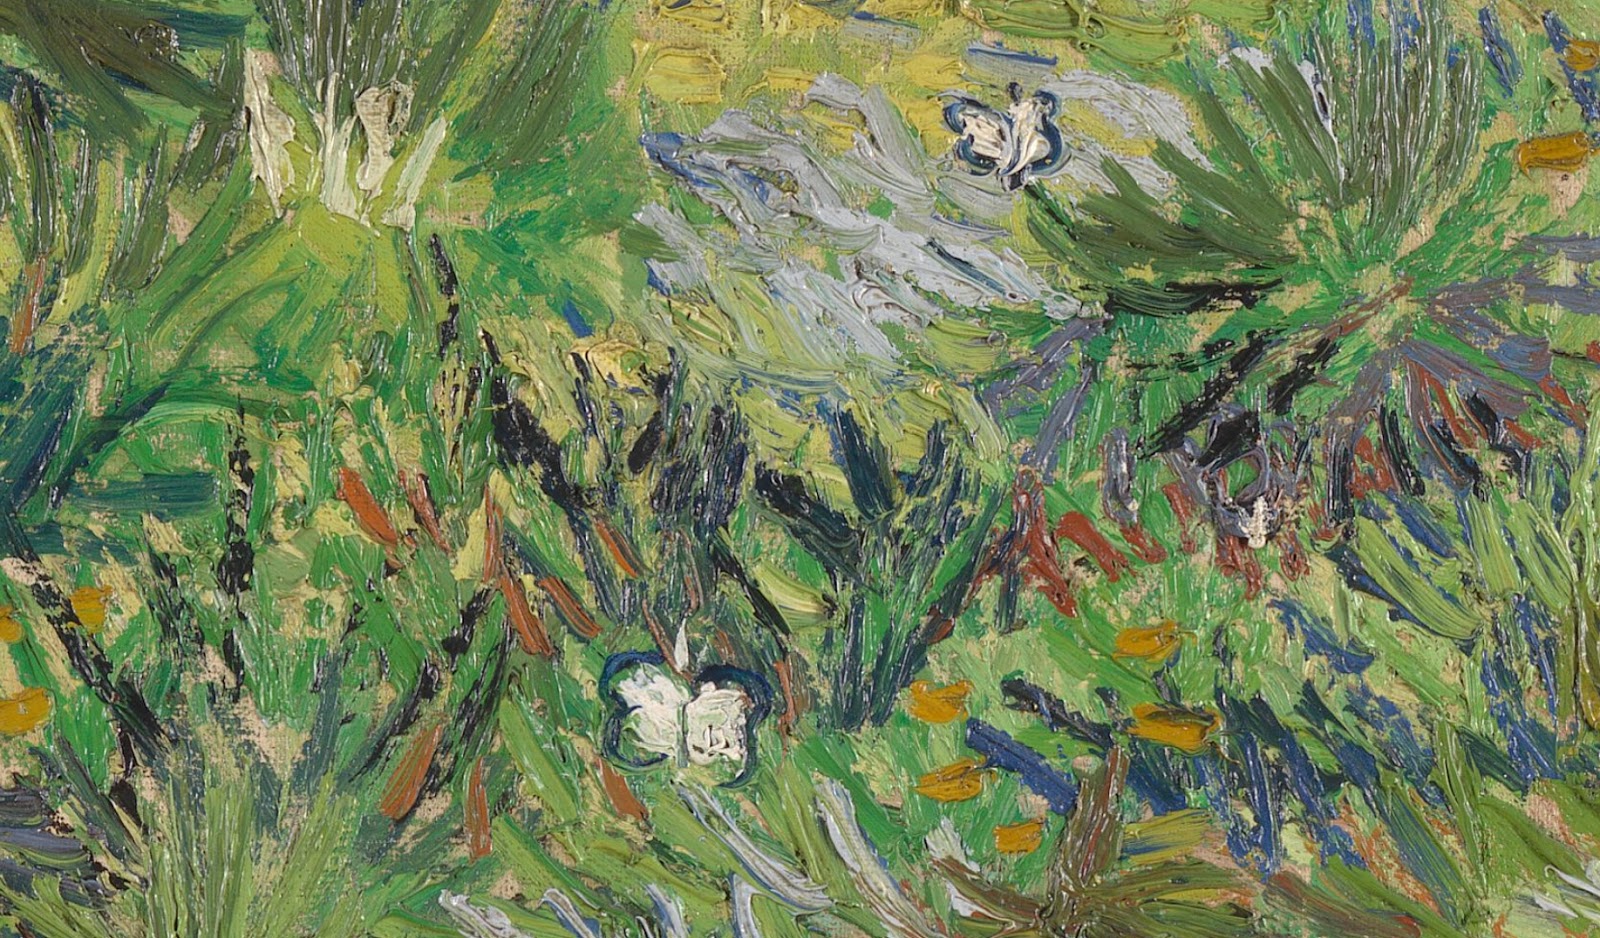 Vincent+Van+Gogh-1853-1890 (886).jpg